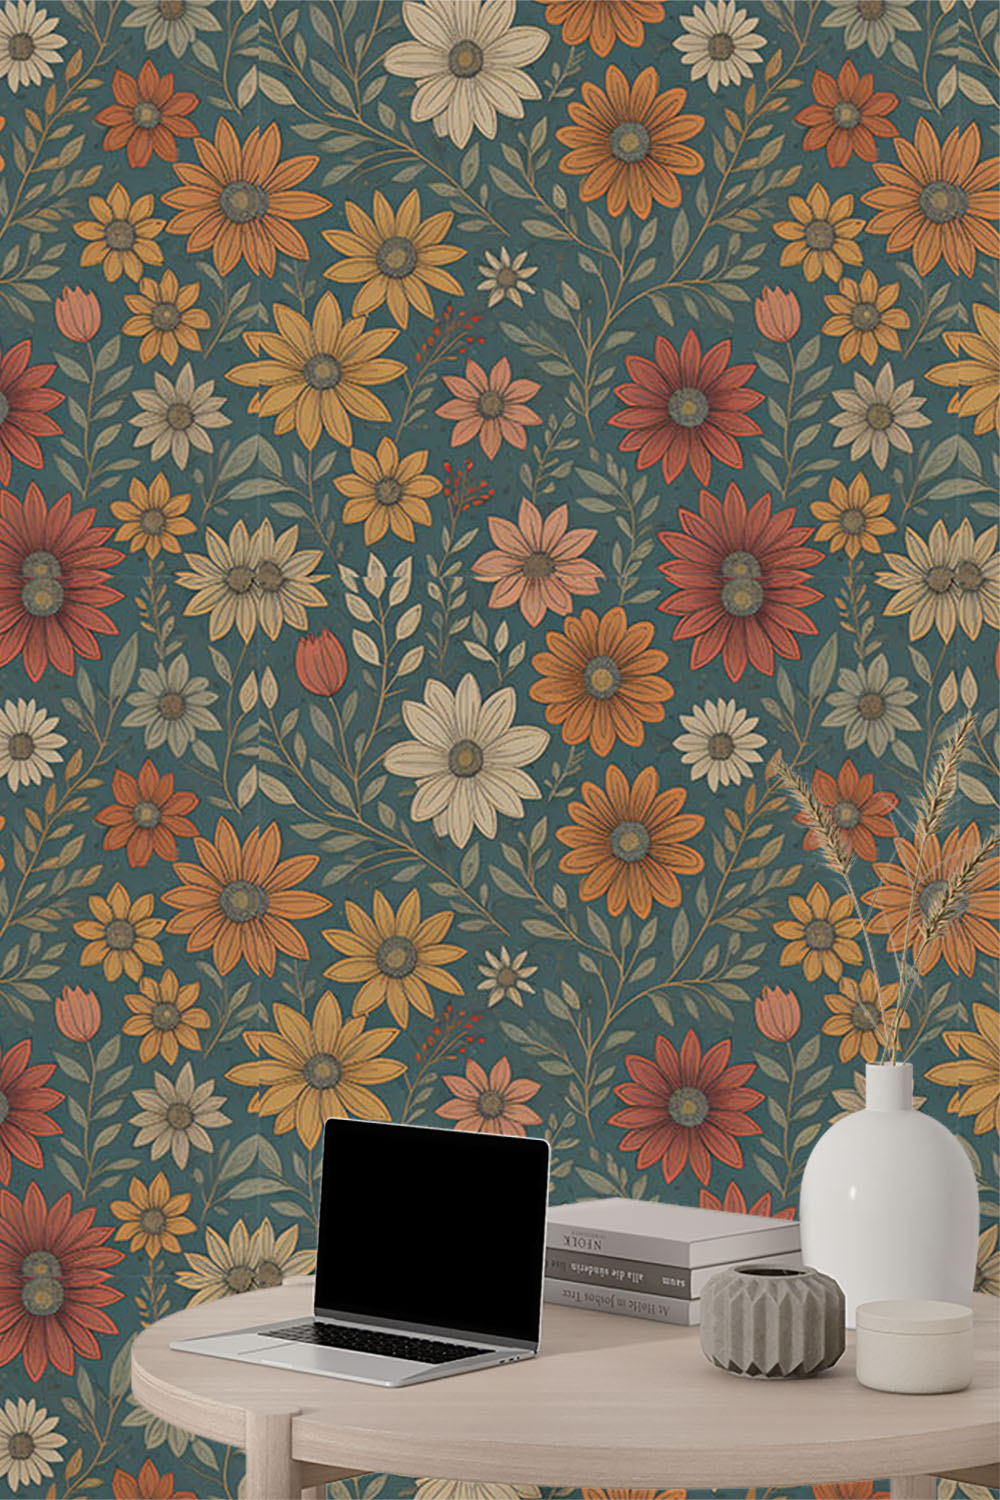 daisy-flower-with-leaves-vine-in-dark-background-wallpaper-sample